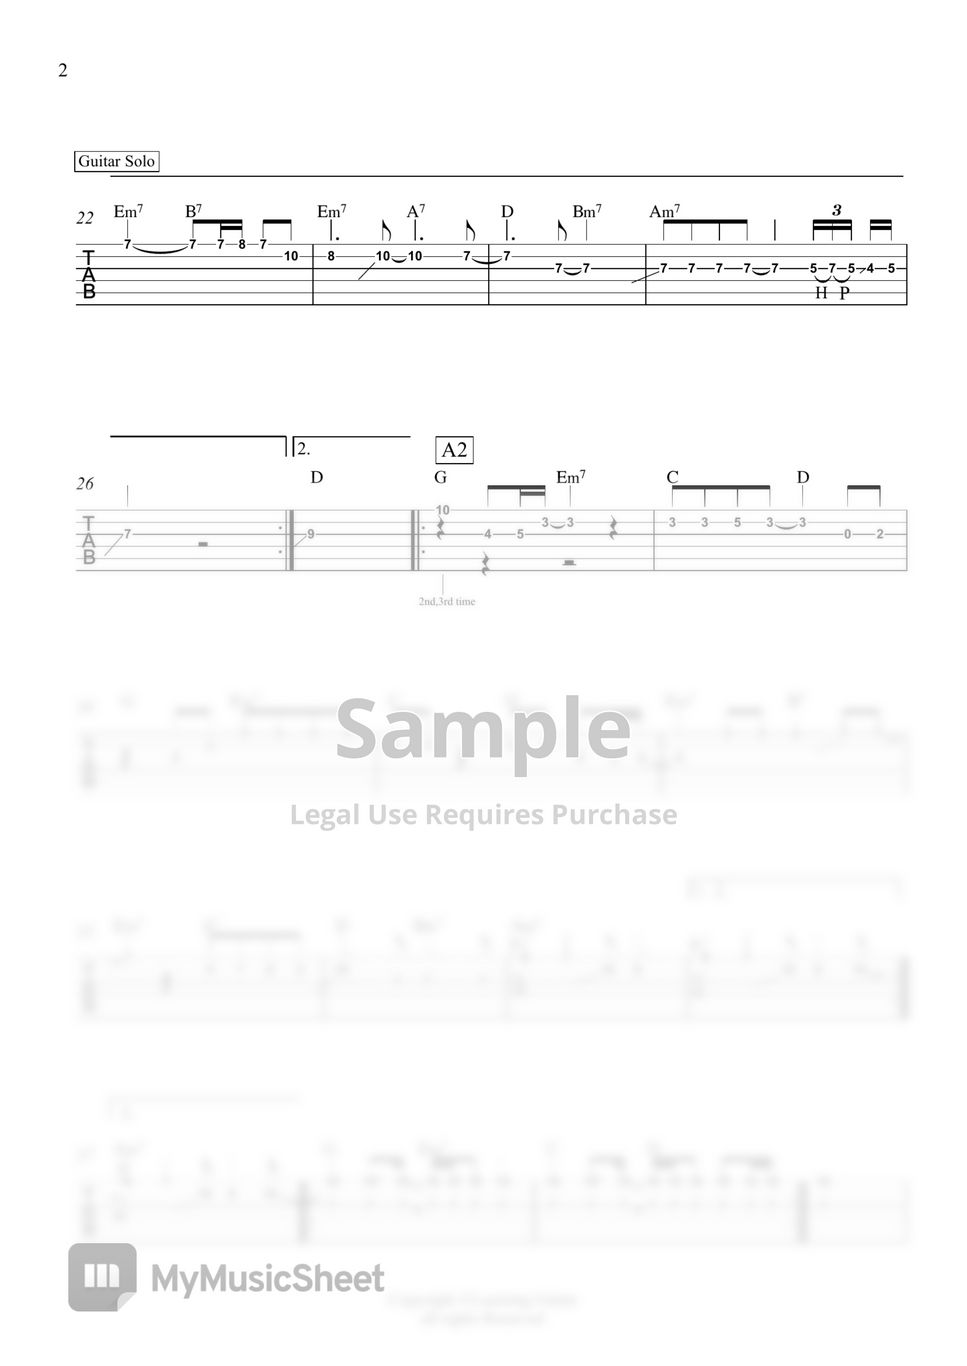 Bangles - Eternal Flame (Guitar MelodyTAB) by Learning Guitar